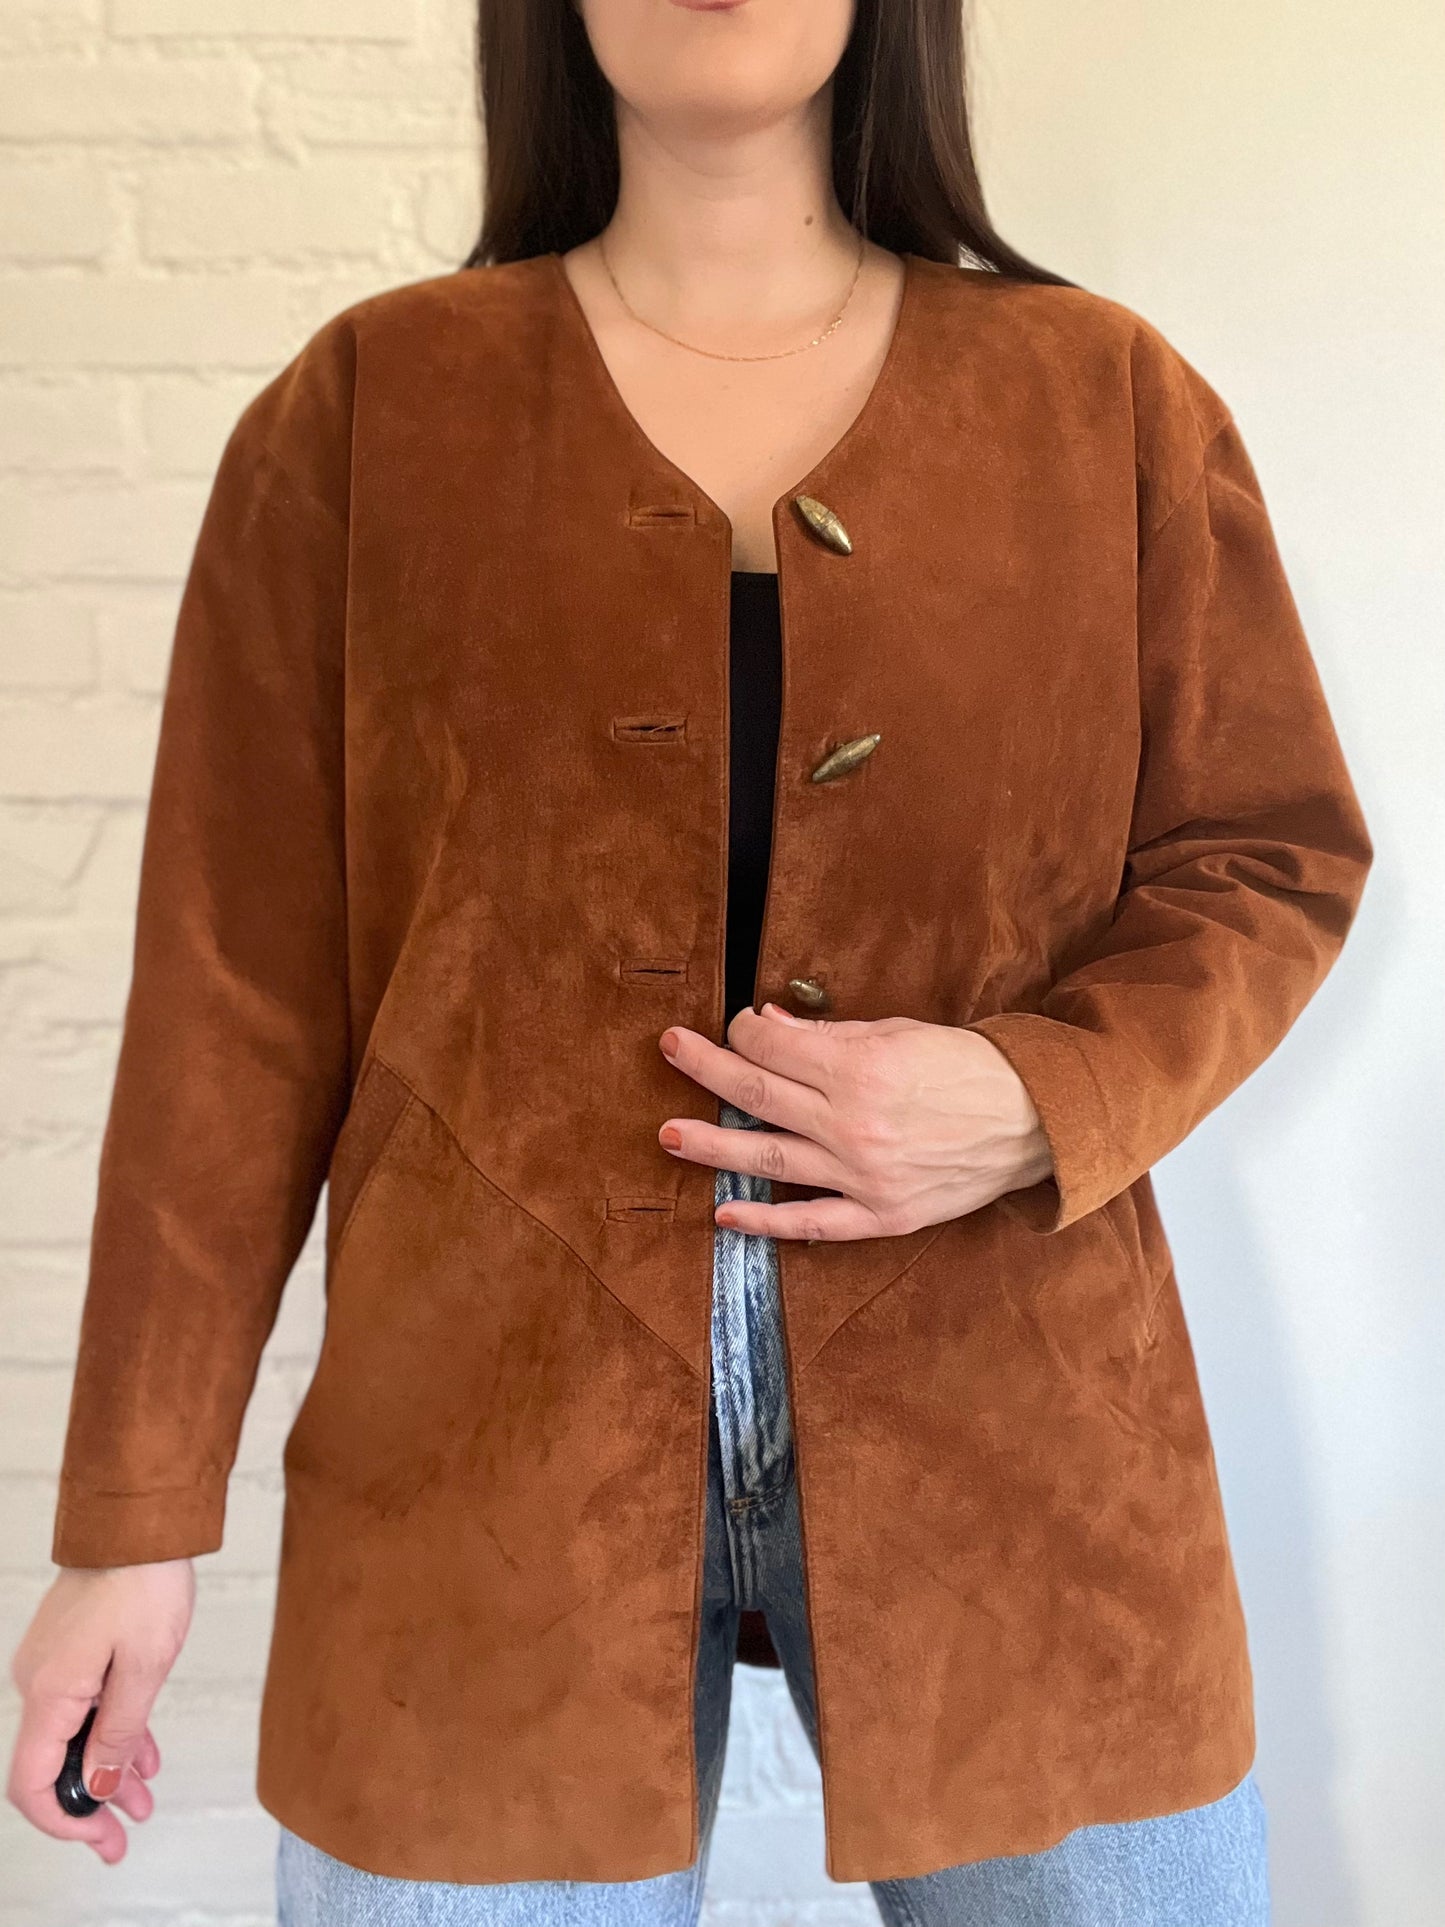 Vintage Brown Suede Jacket - Size S (Oversized)